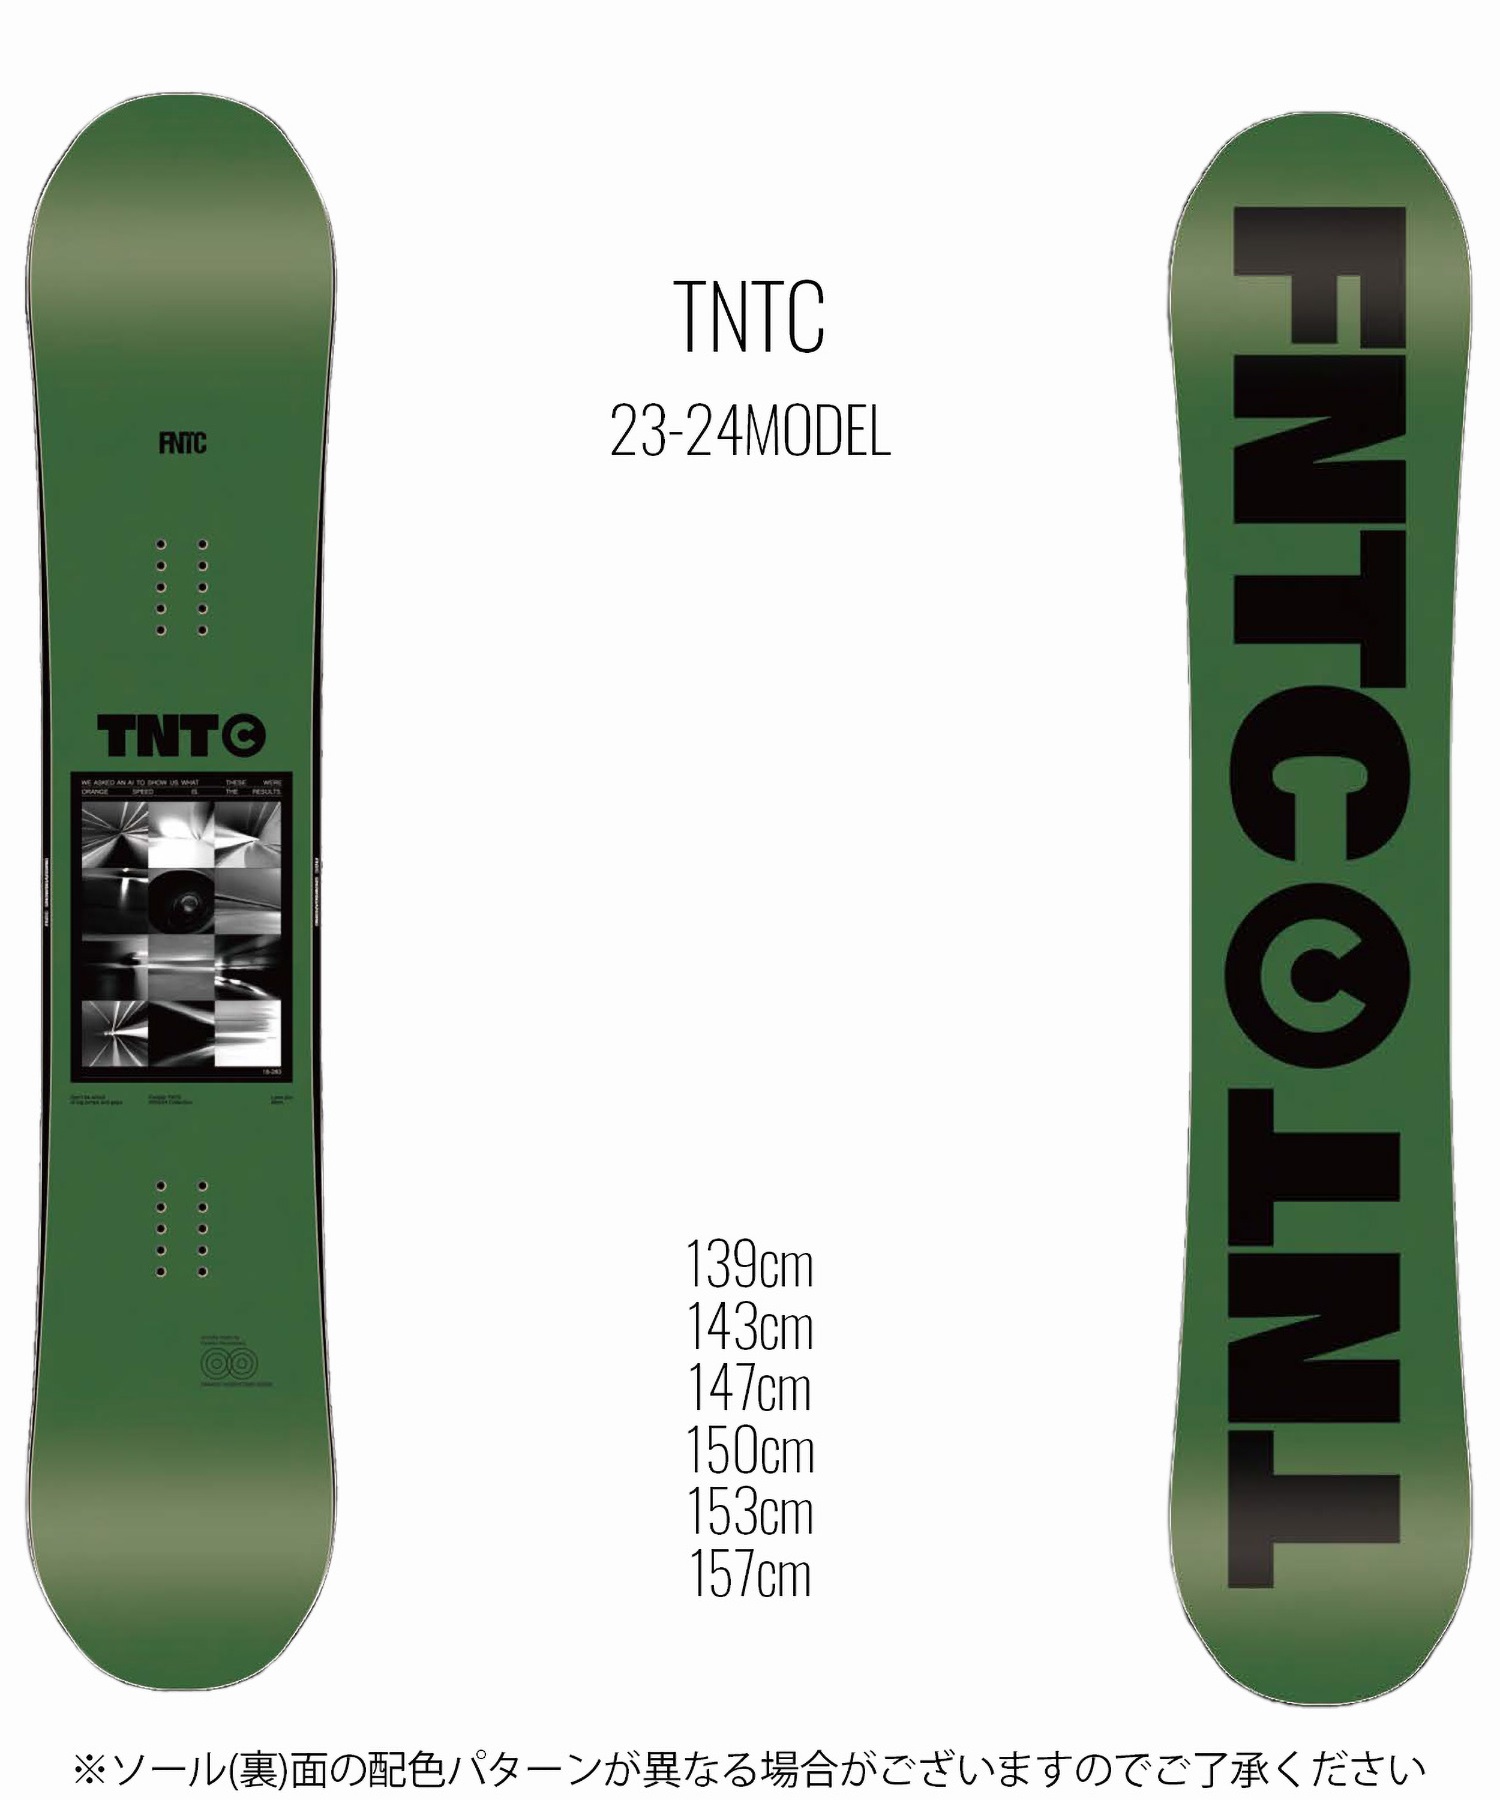 FNTC TNTC 23-24モデル 150cm GREEN | camillevieraservices.com